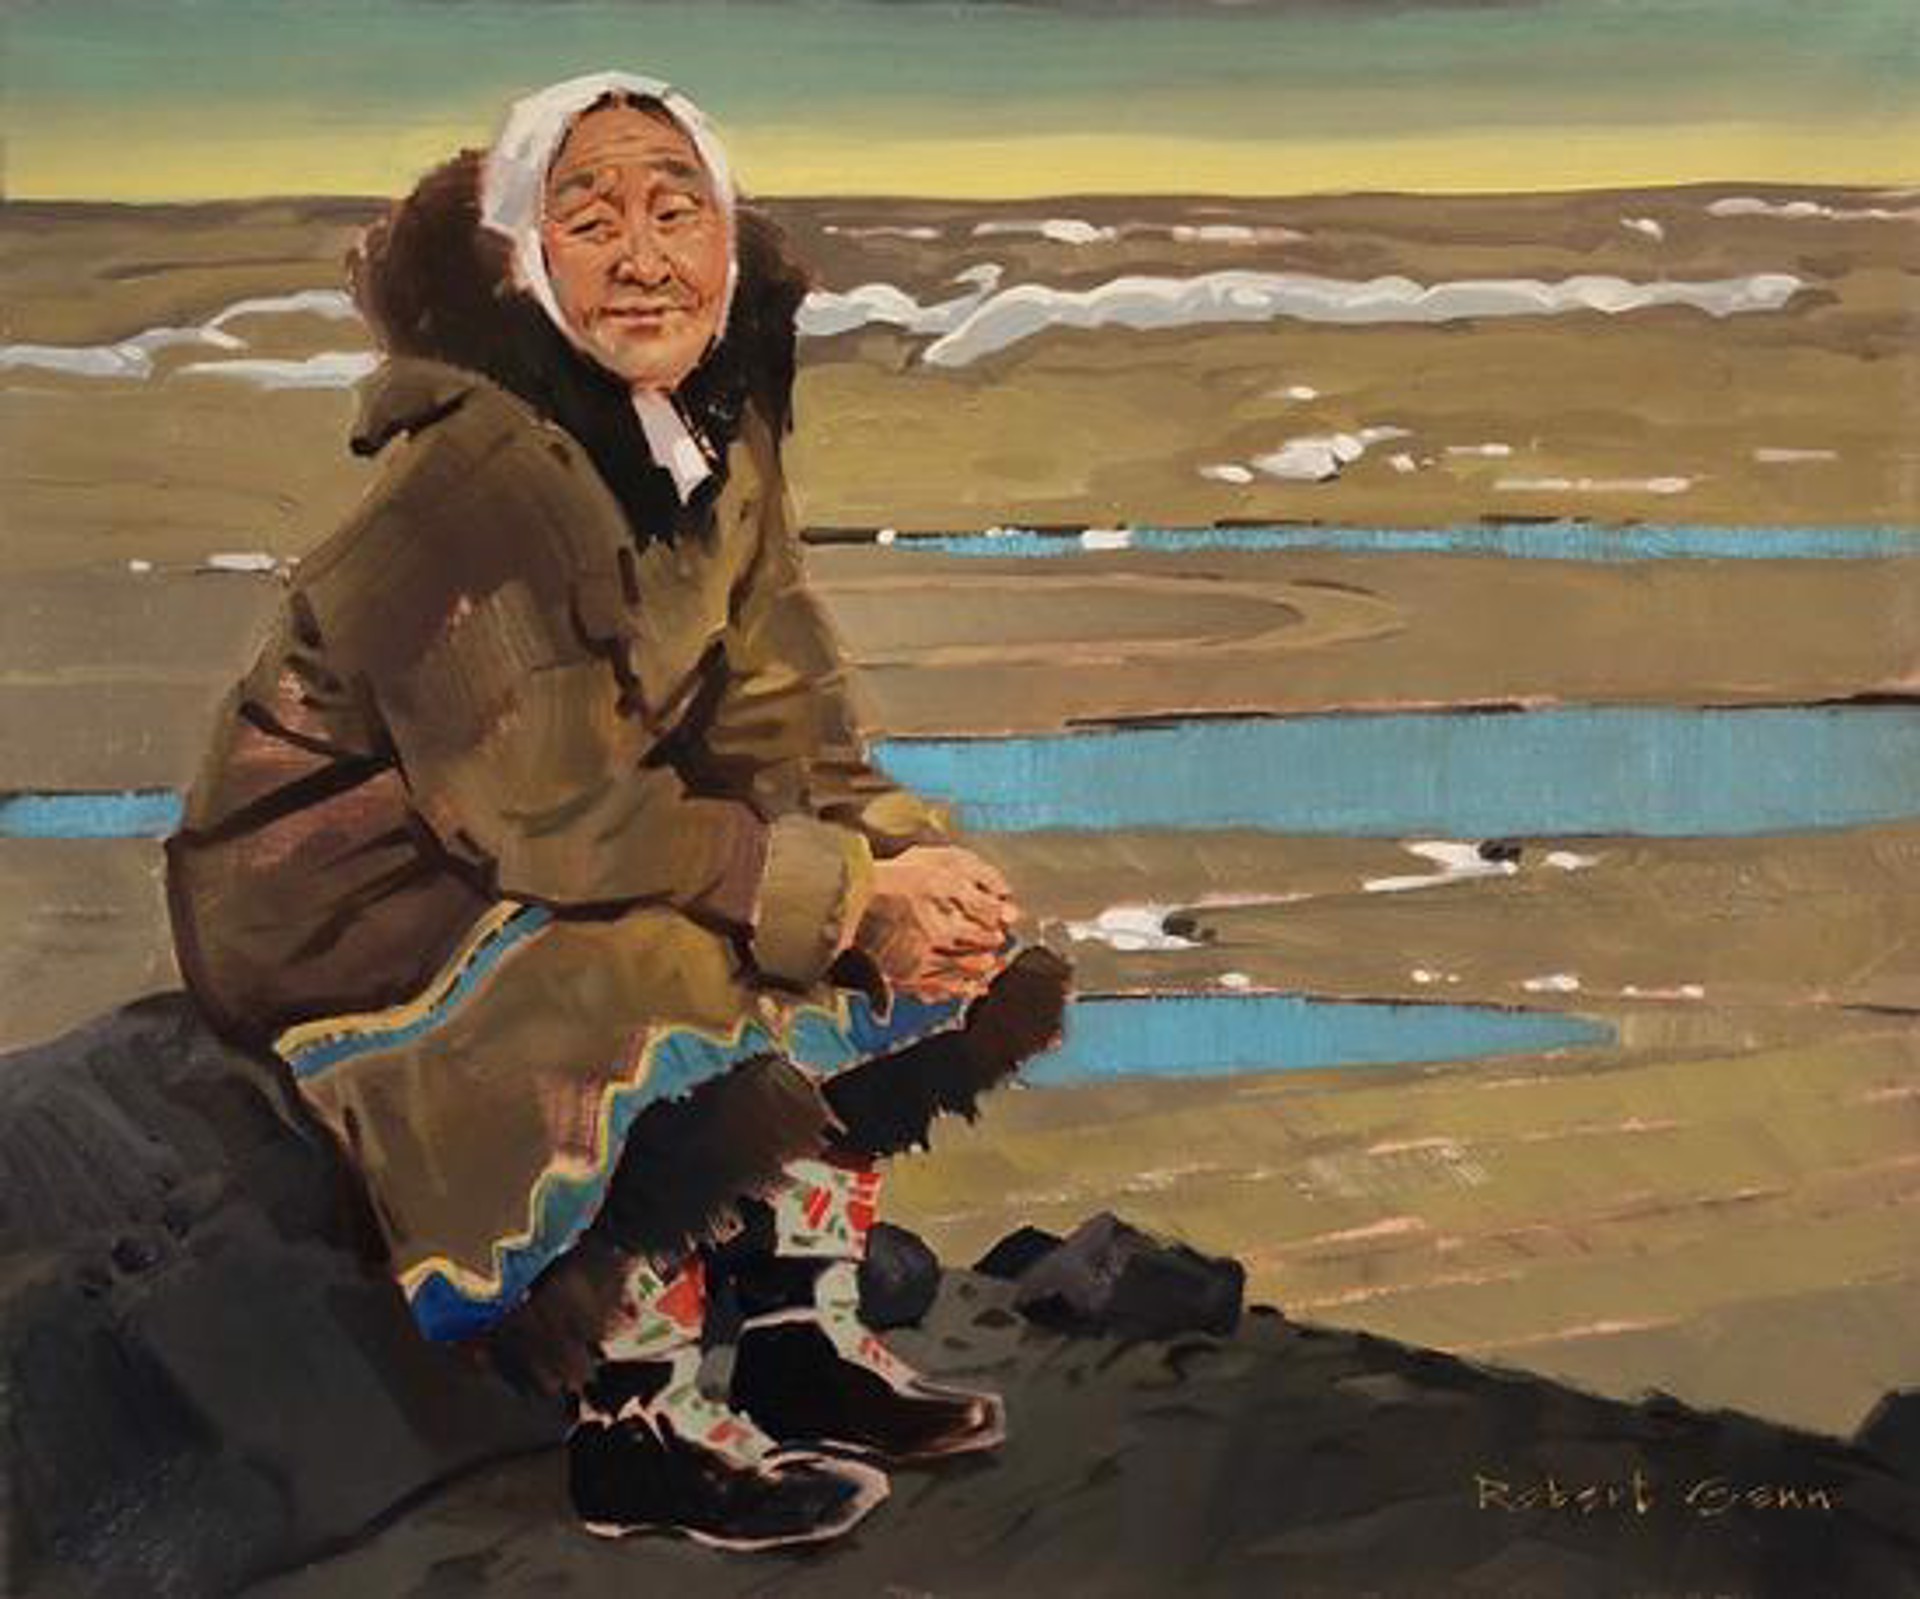 Woman of the Barrens by Robert Genn (1936-2014)